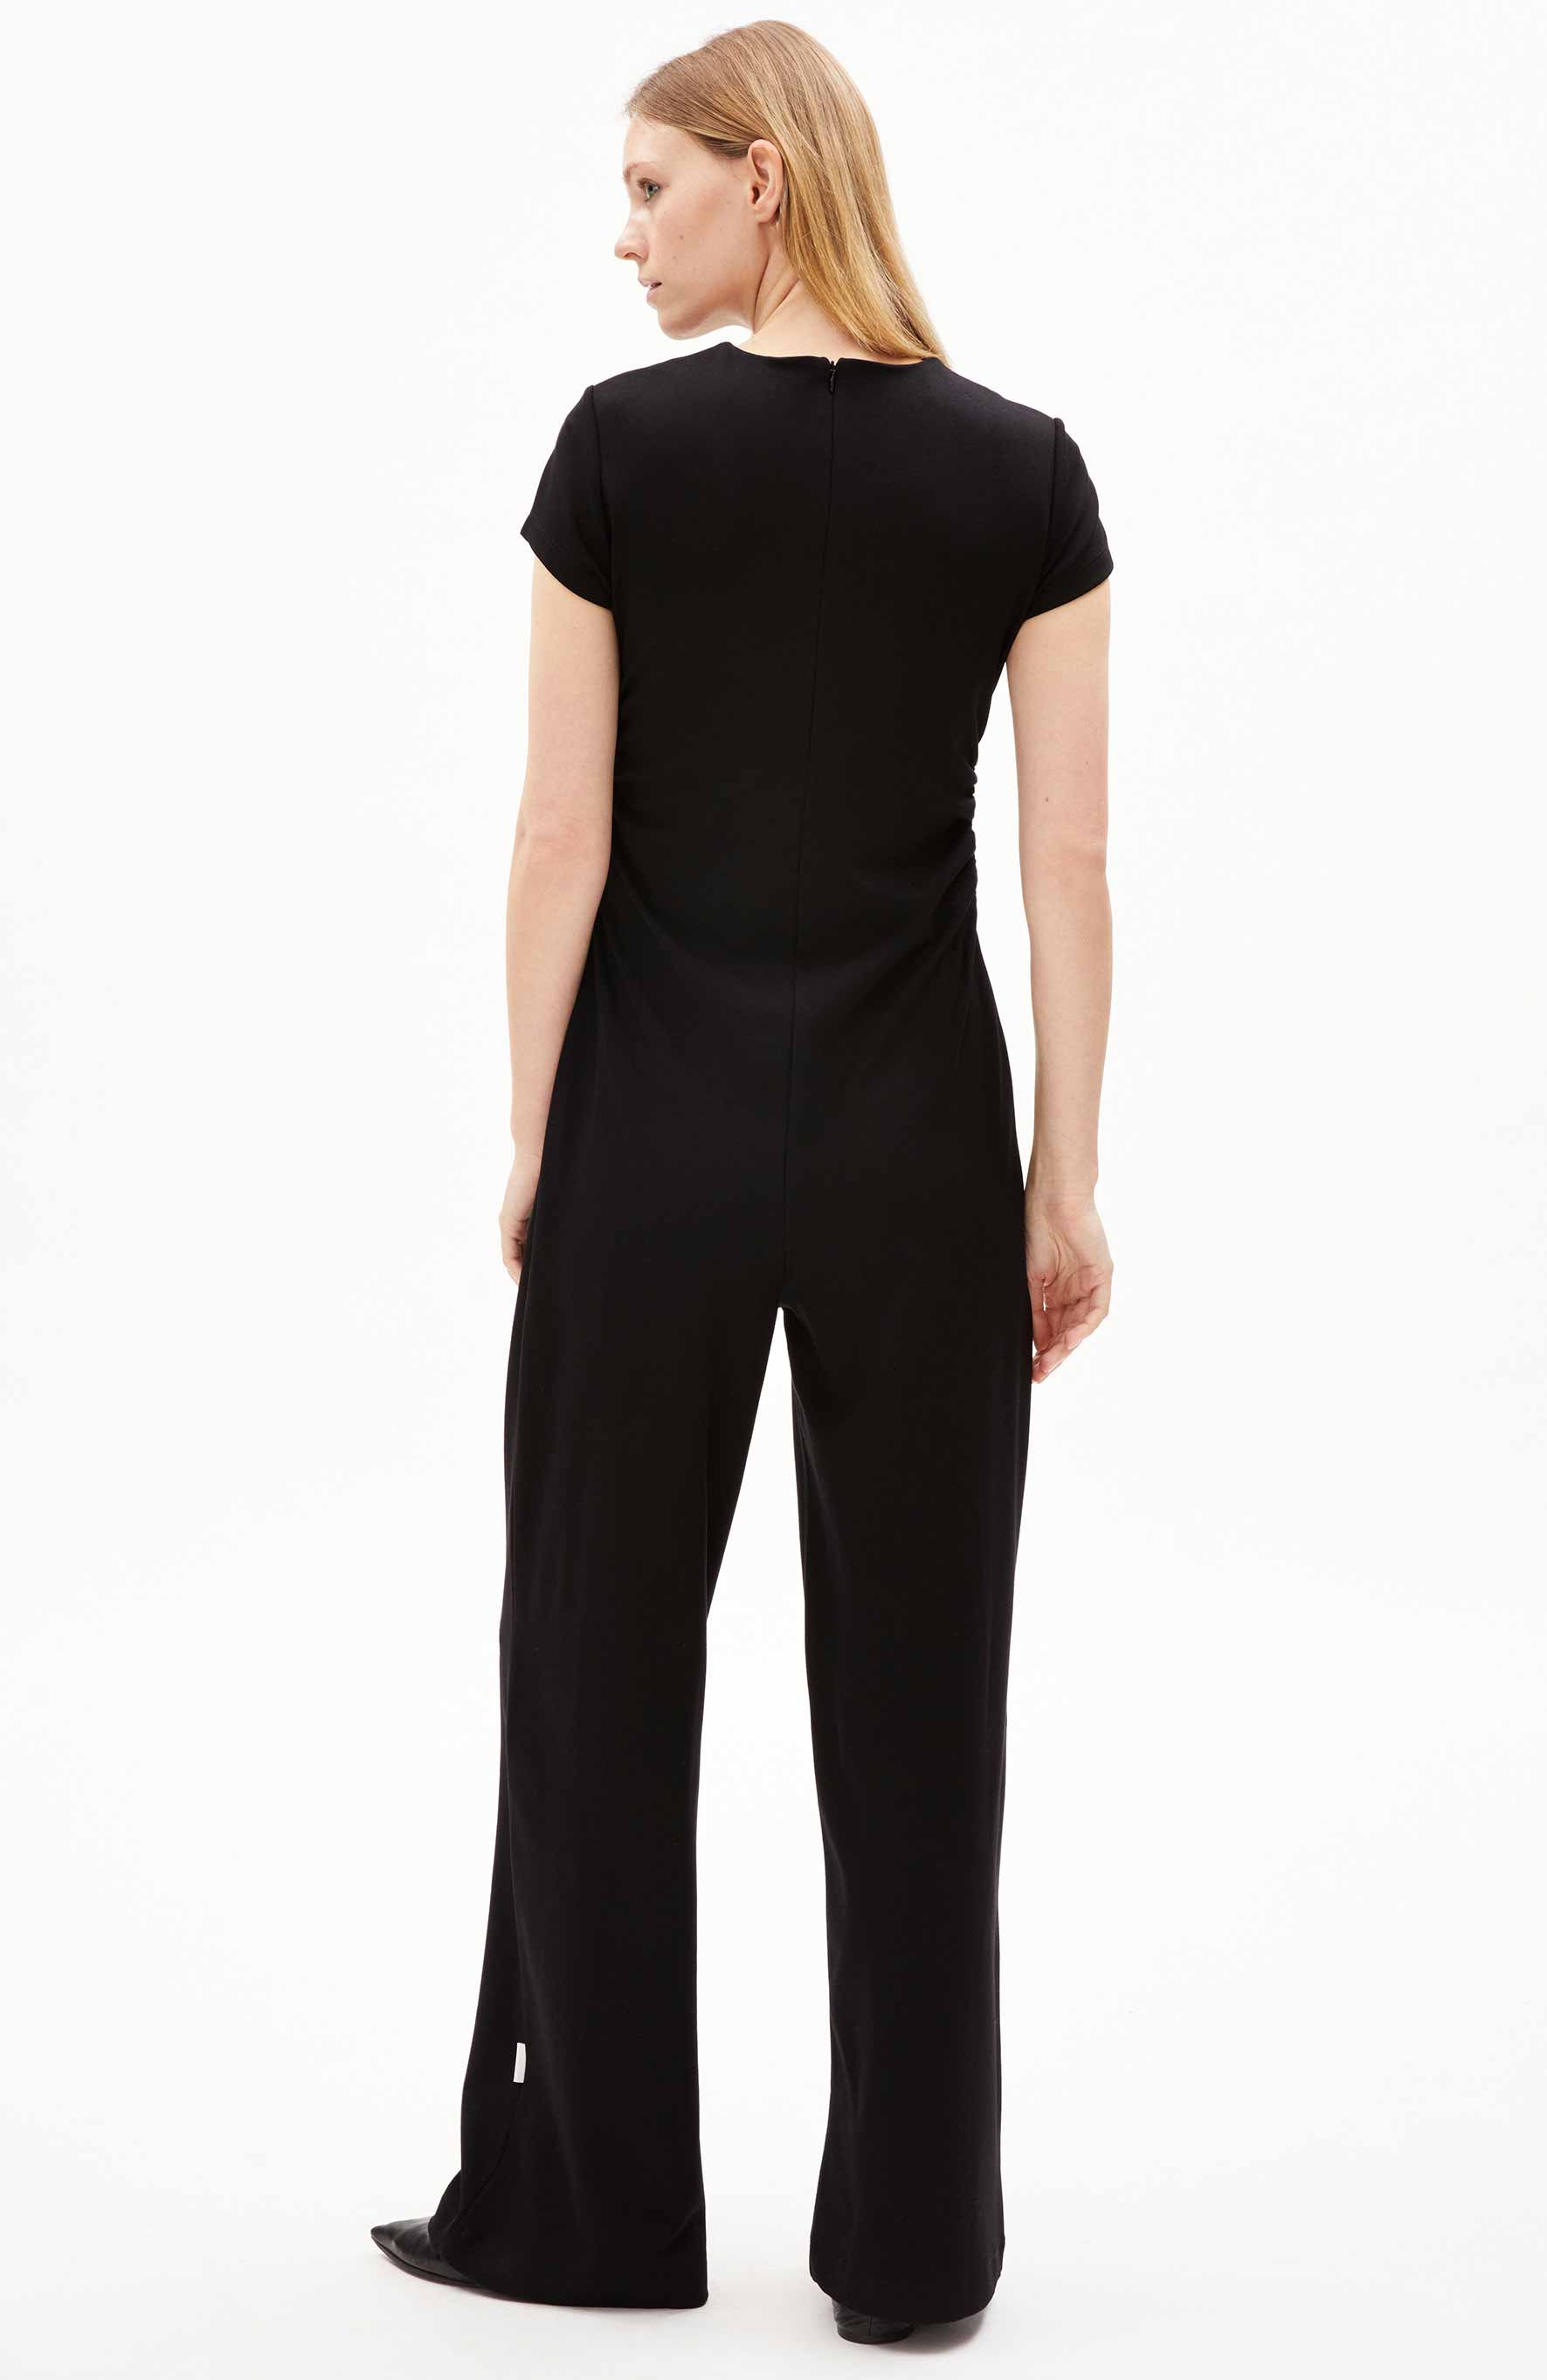 ARMEDANGELS Dulciaa jumpsuit black by Ecovero for women | Sophie Stone